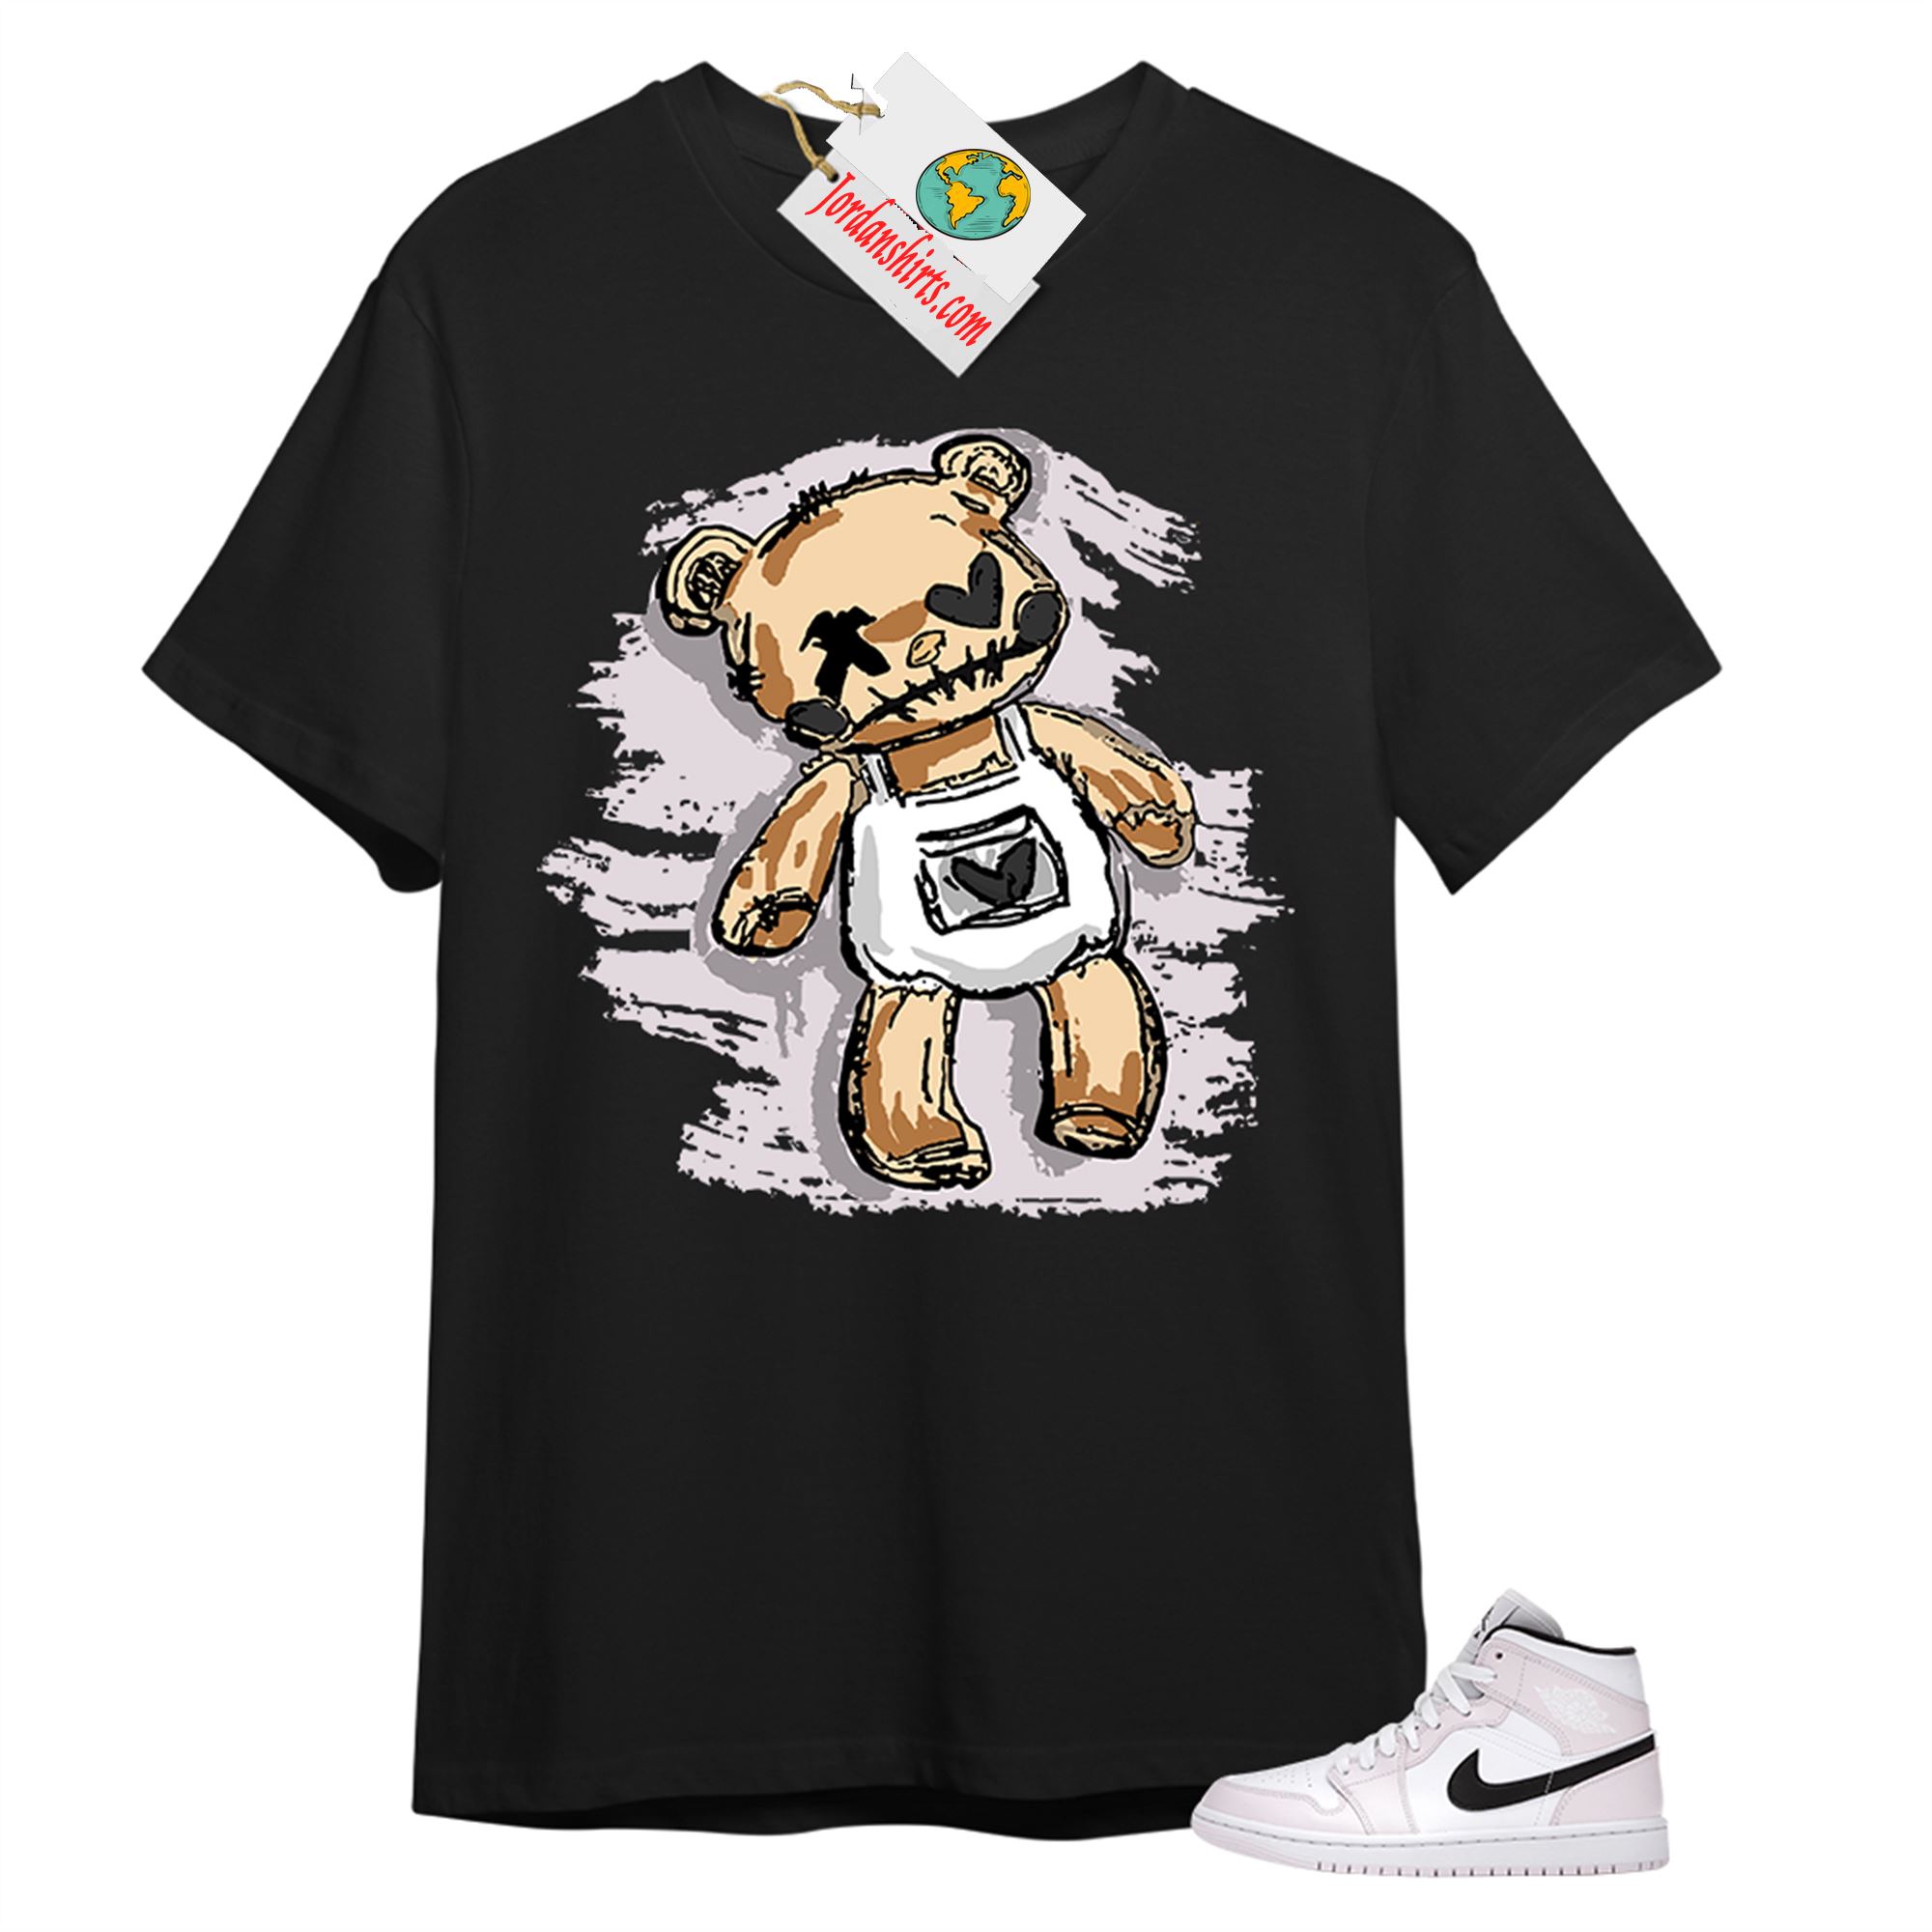 Jordan 1 Shirt, Teddy Bear Broken Heart Black T-shirt Air Jordan 1 Barely Rose 1s Plus Size Up To 5xl